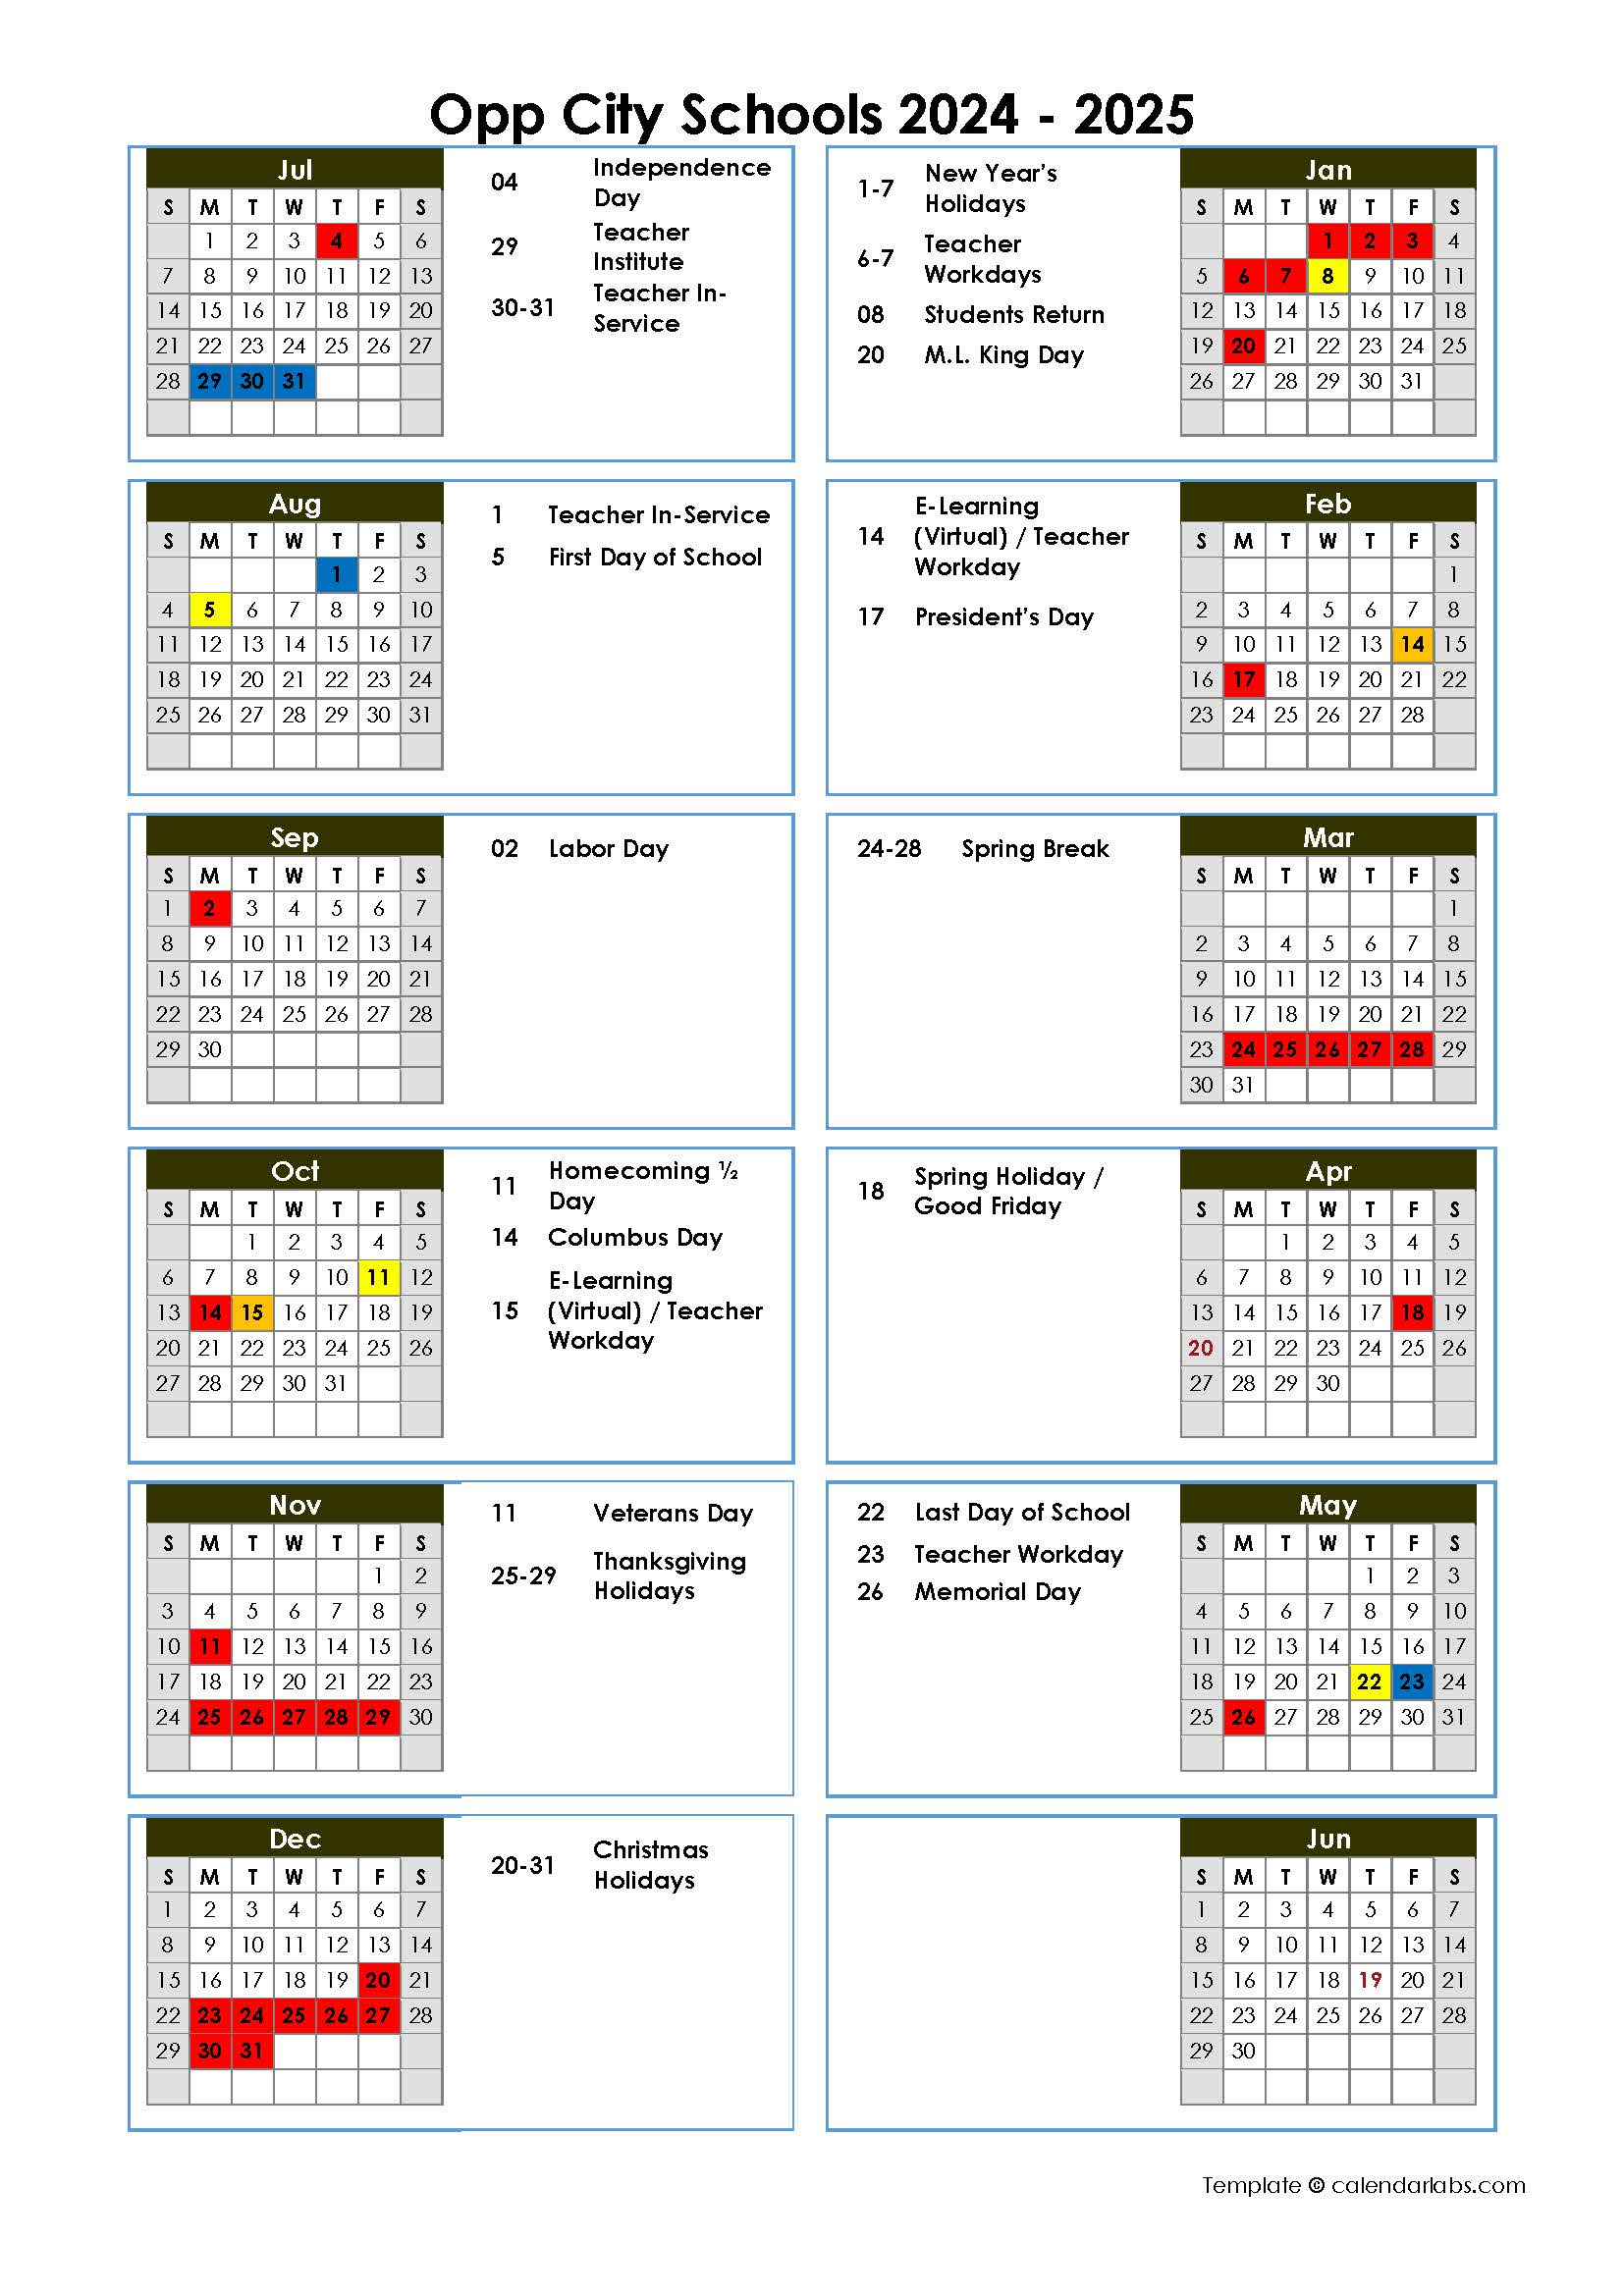 24-25 District Calendar